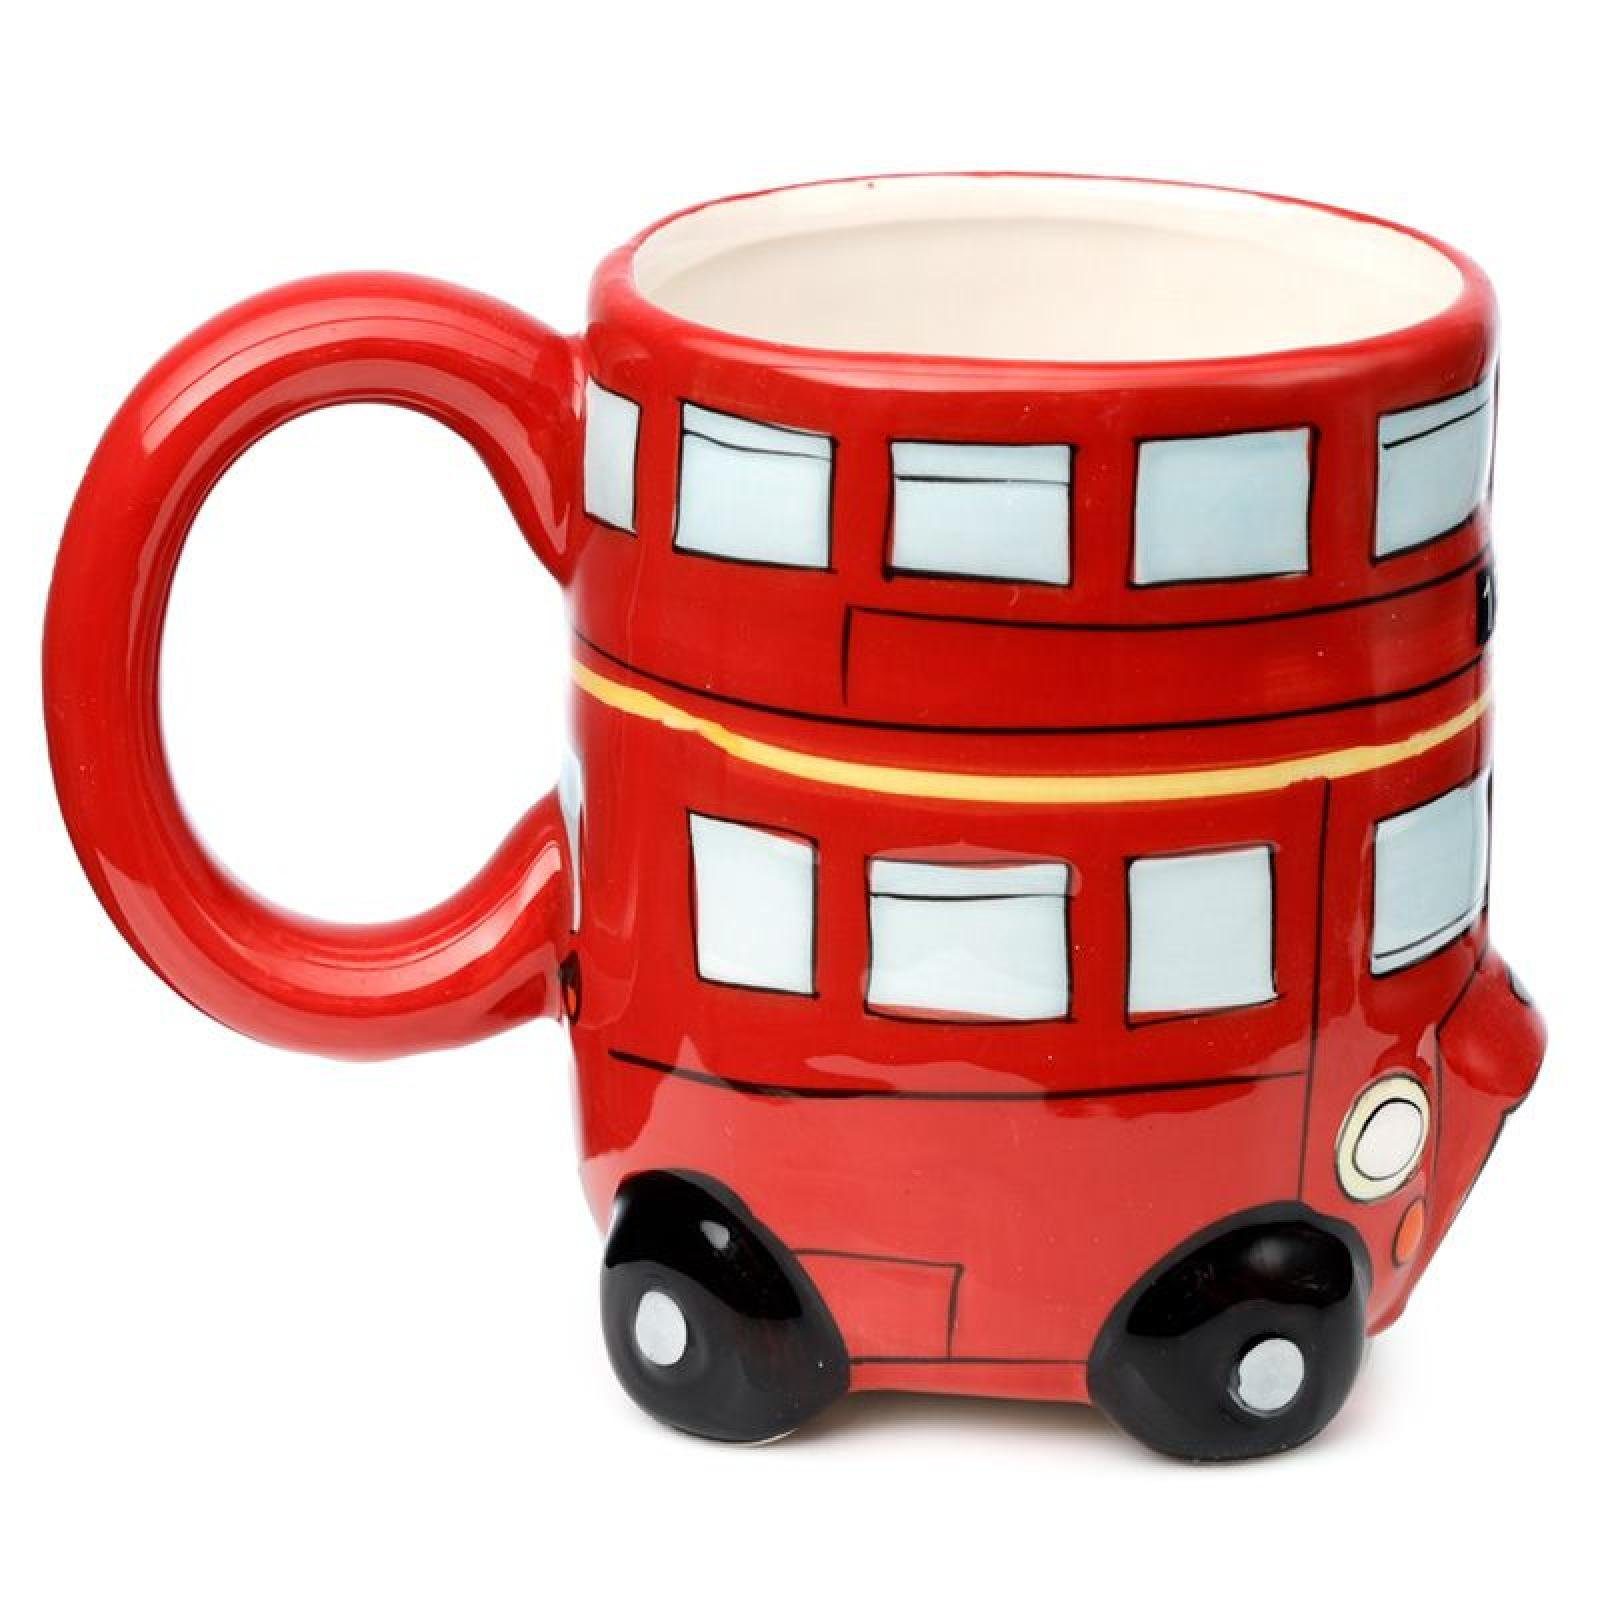 Doppelstockbus Tasse geformte Dolomit-Keramik Neues Puckator aus Tasse Design